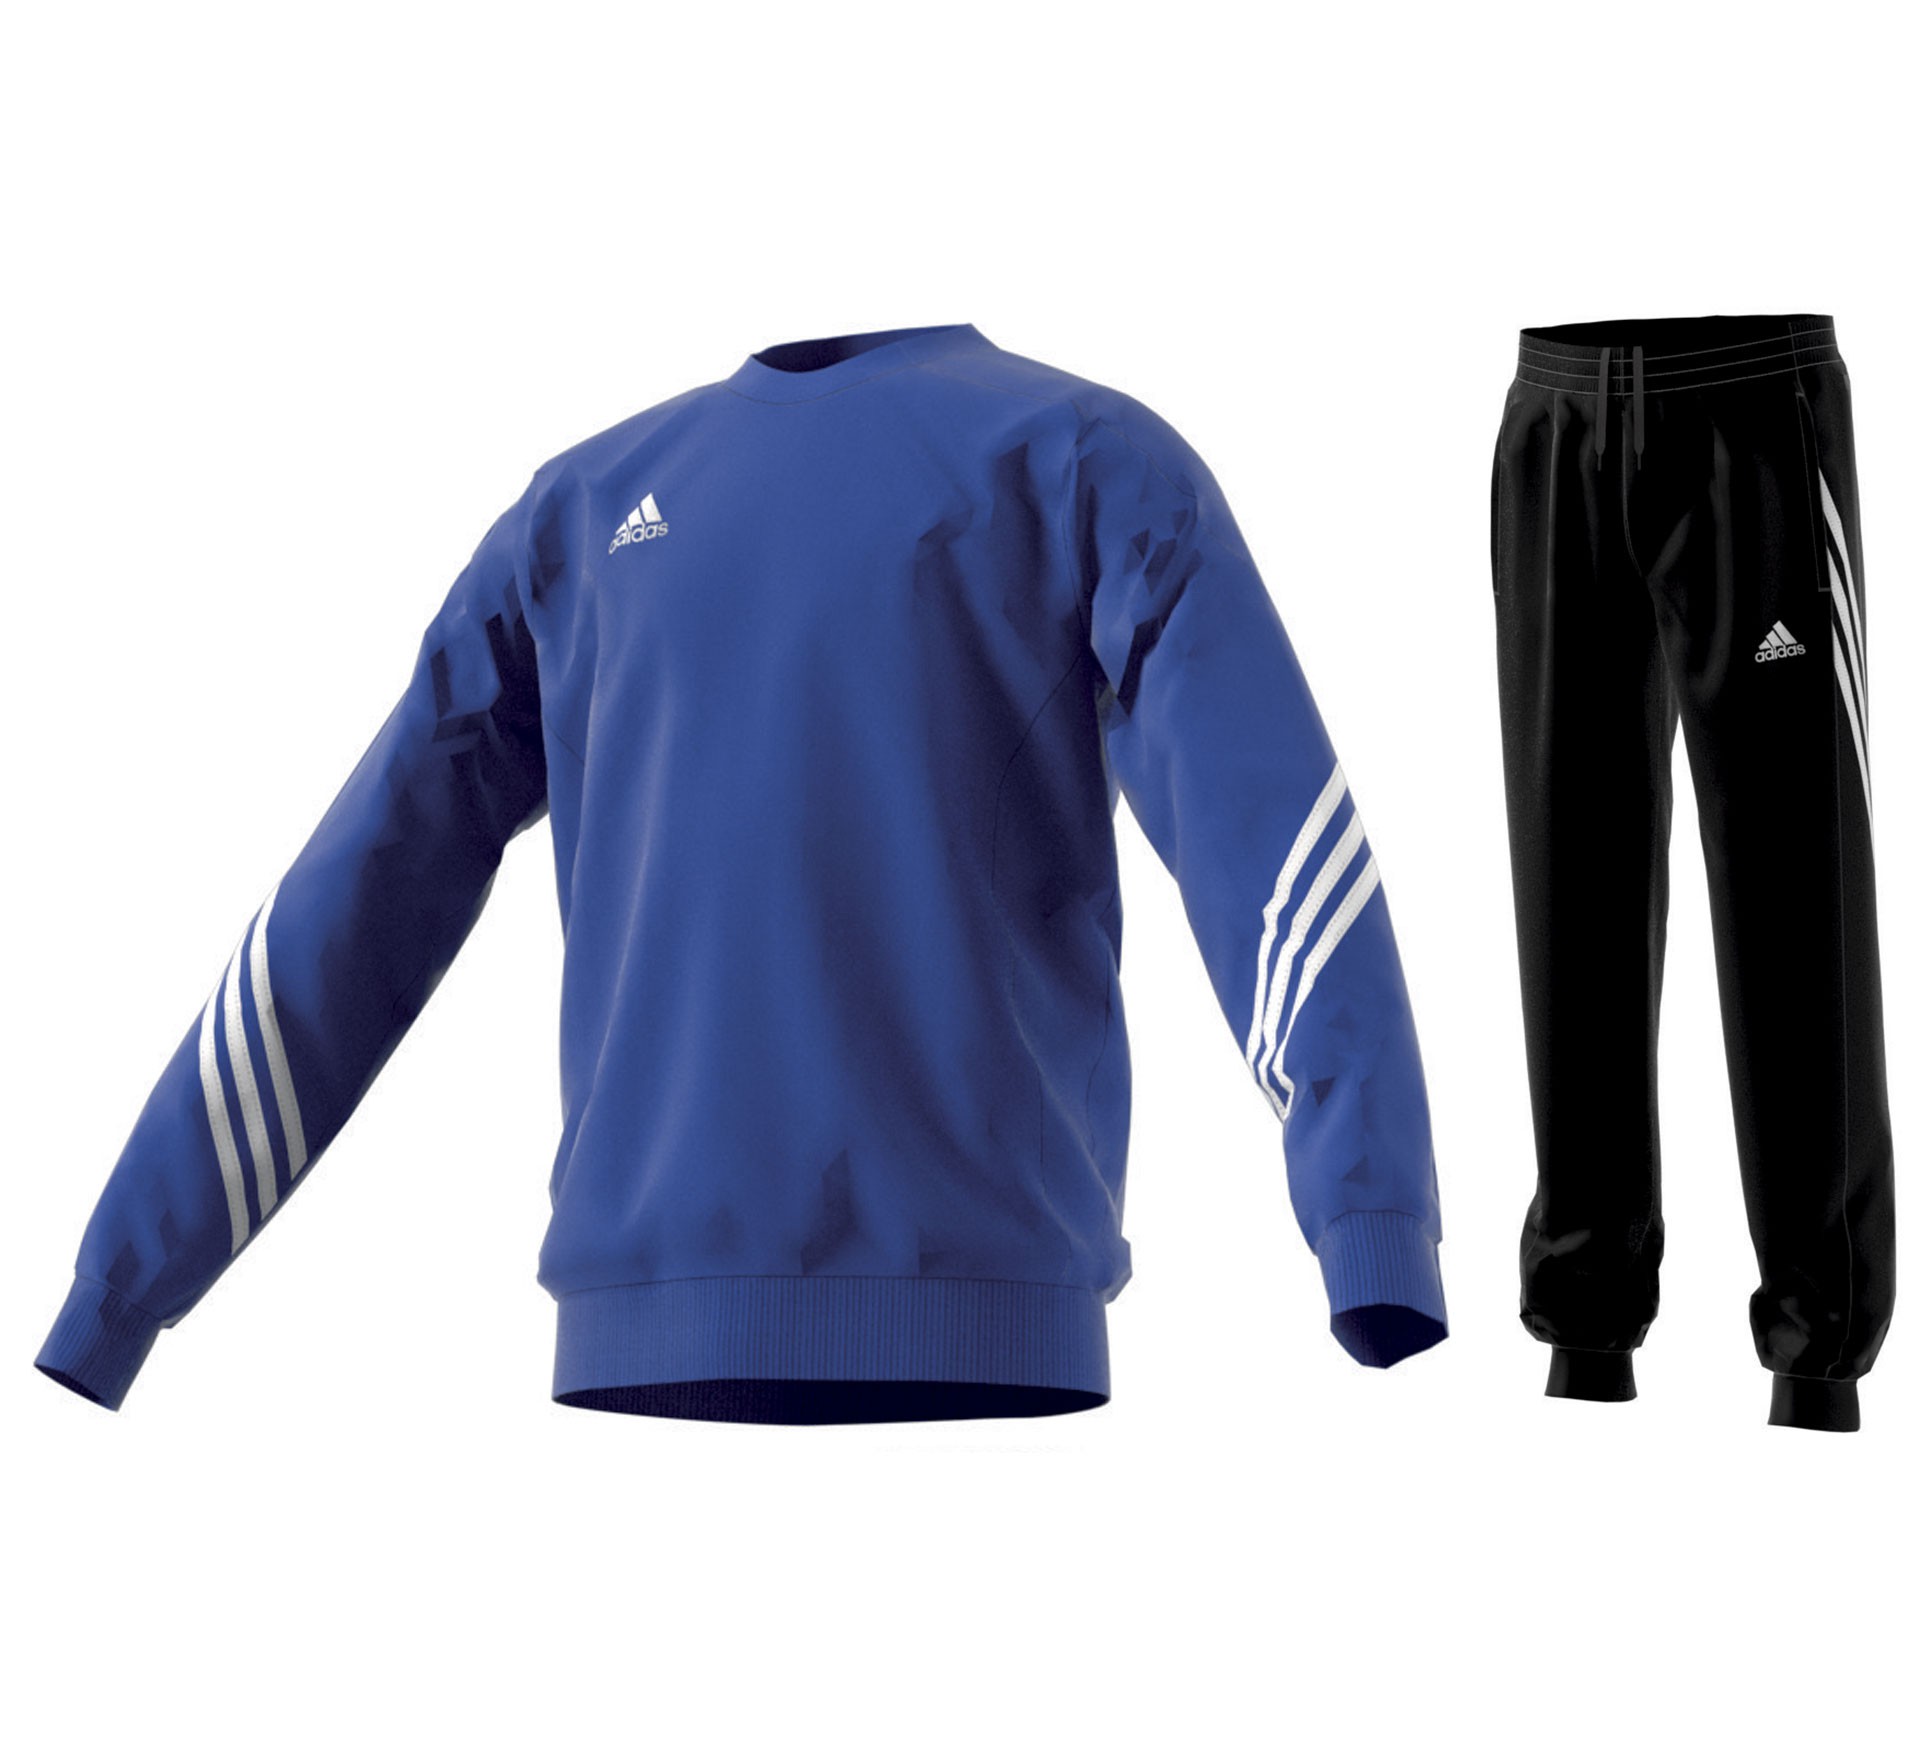 Plutosport - Adidas Sere14 Swt Suit Jr